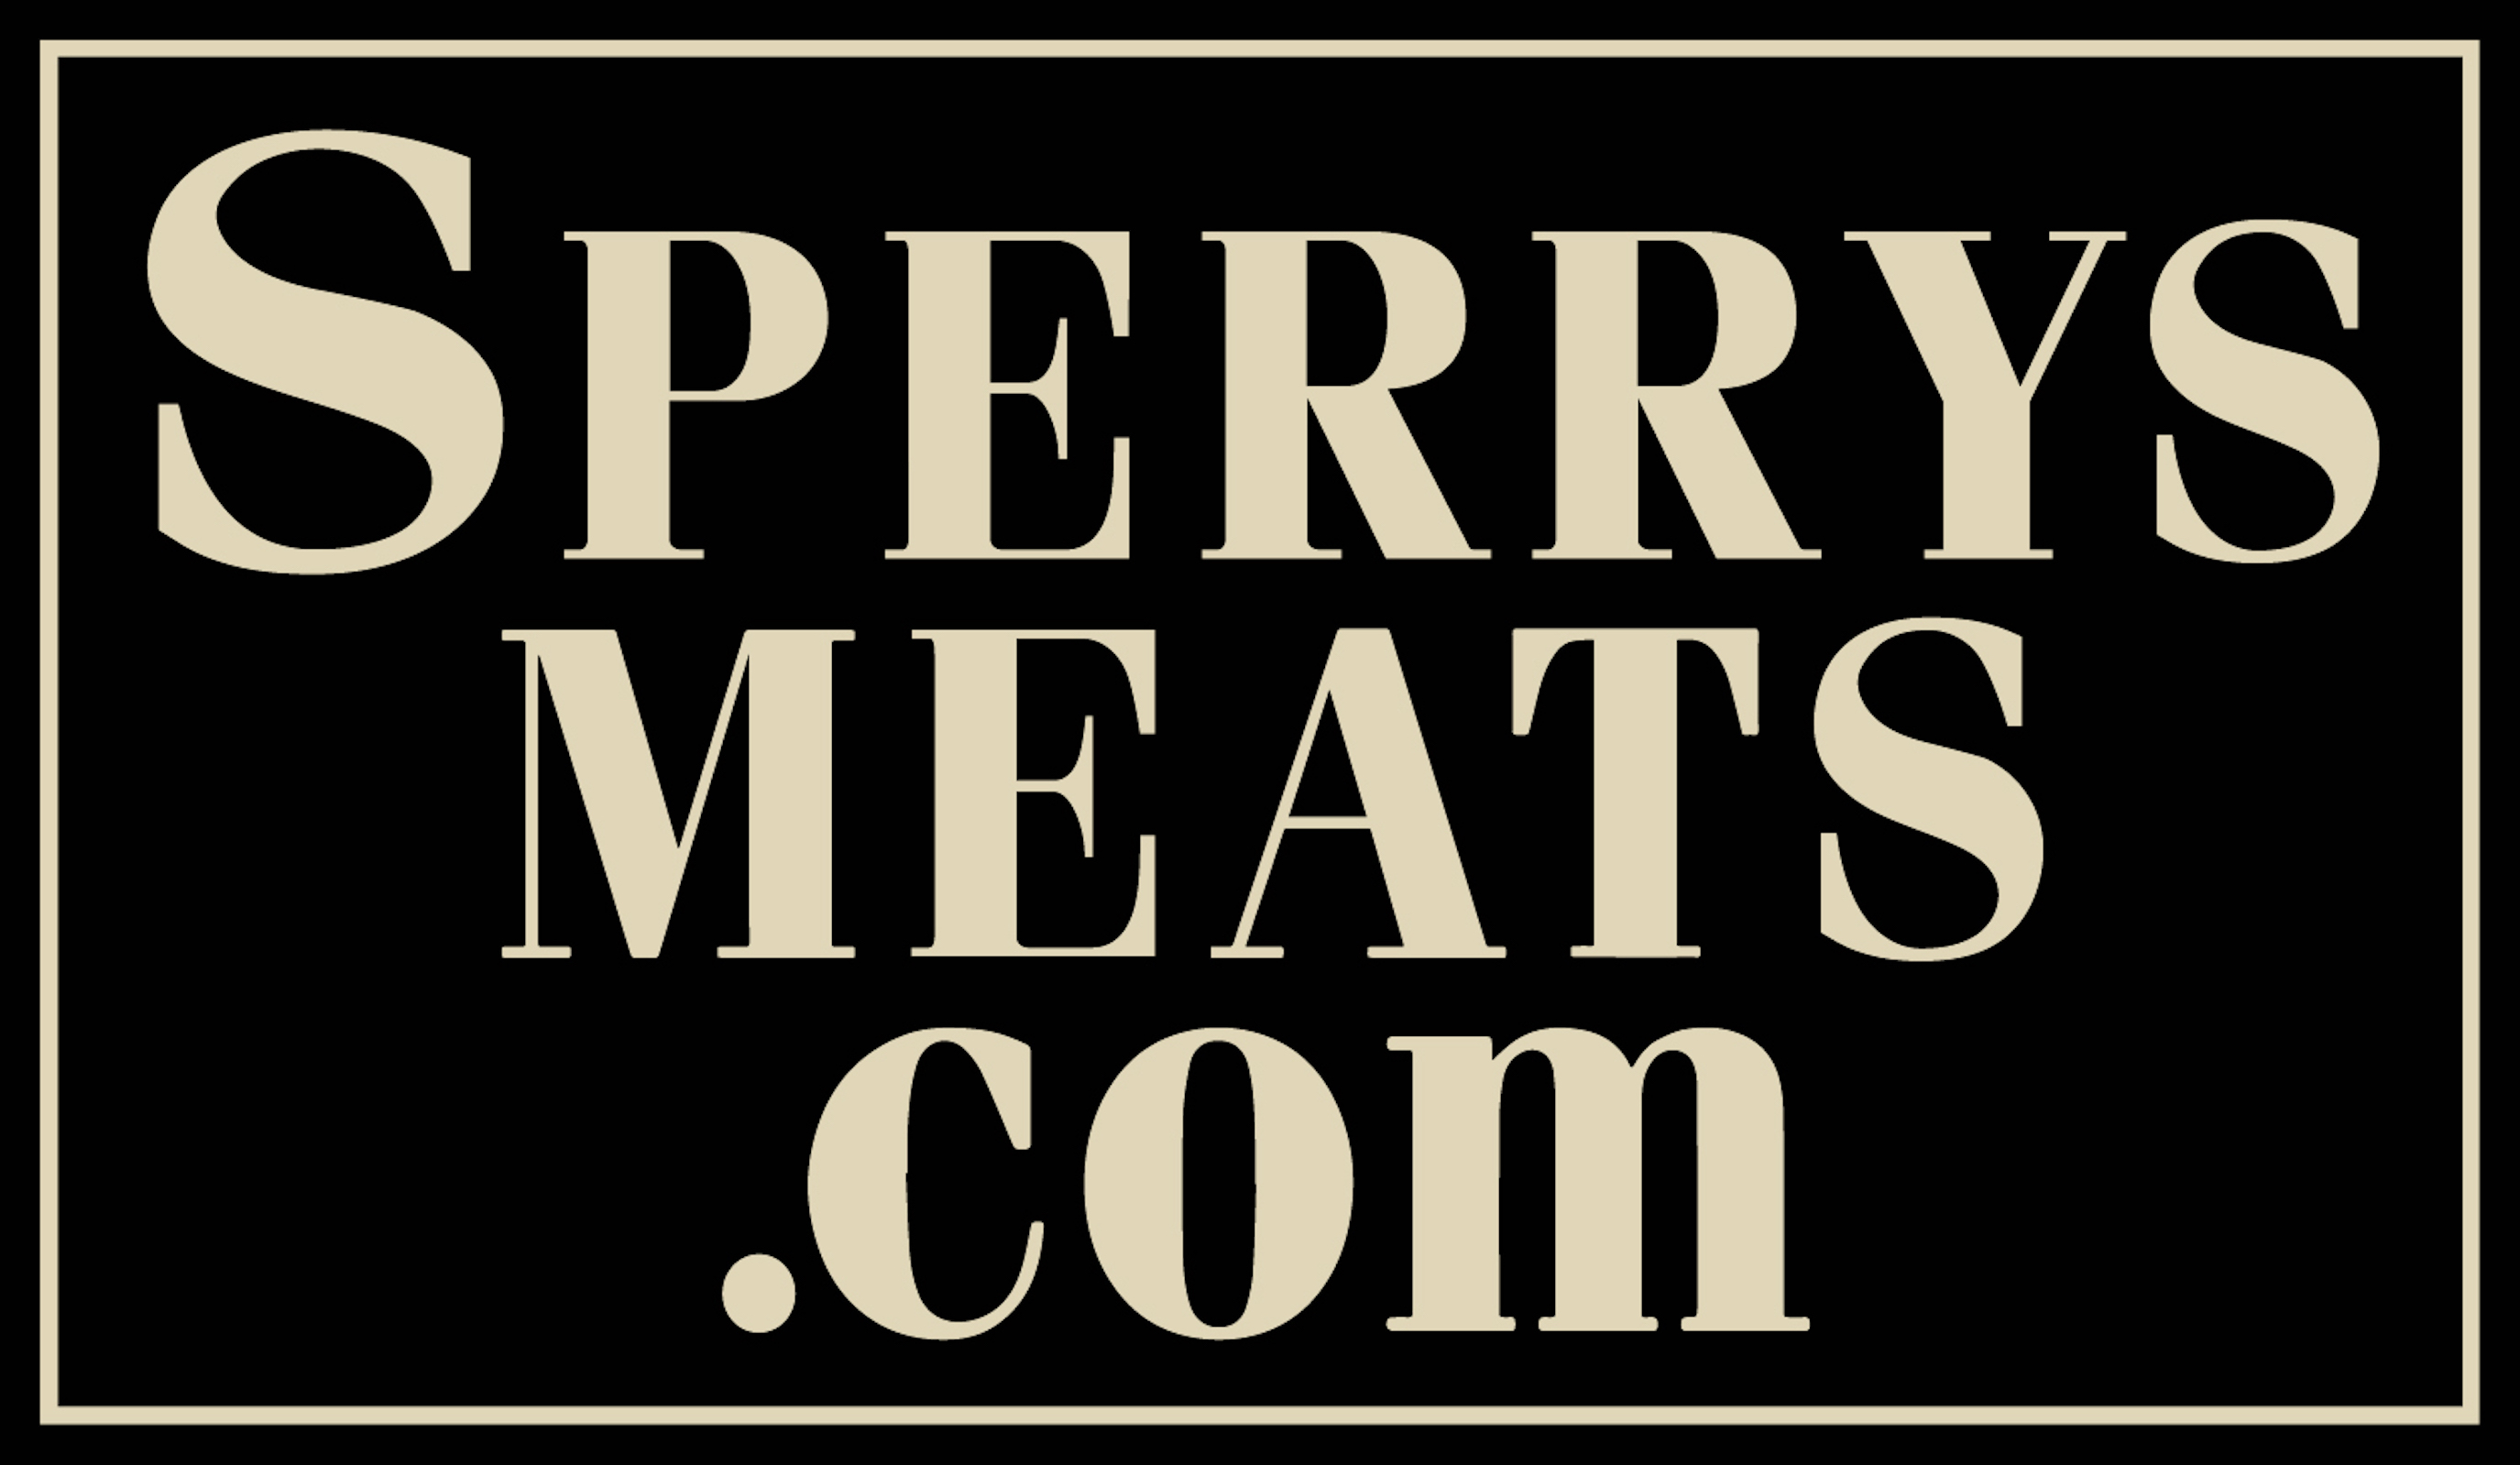 Sperry’s Meats